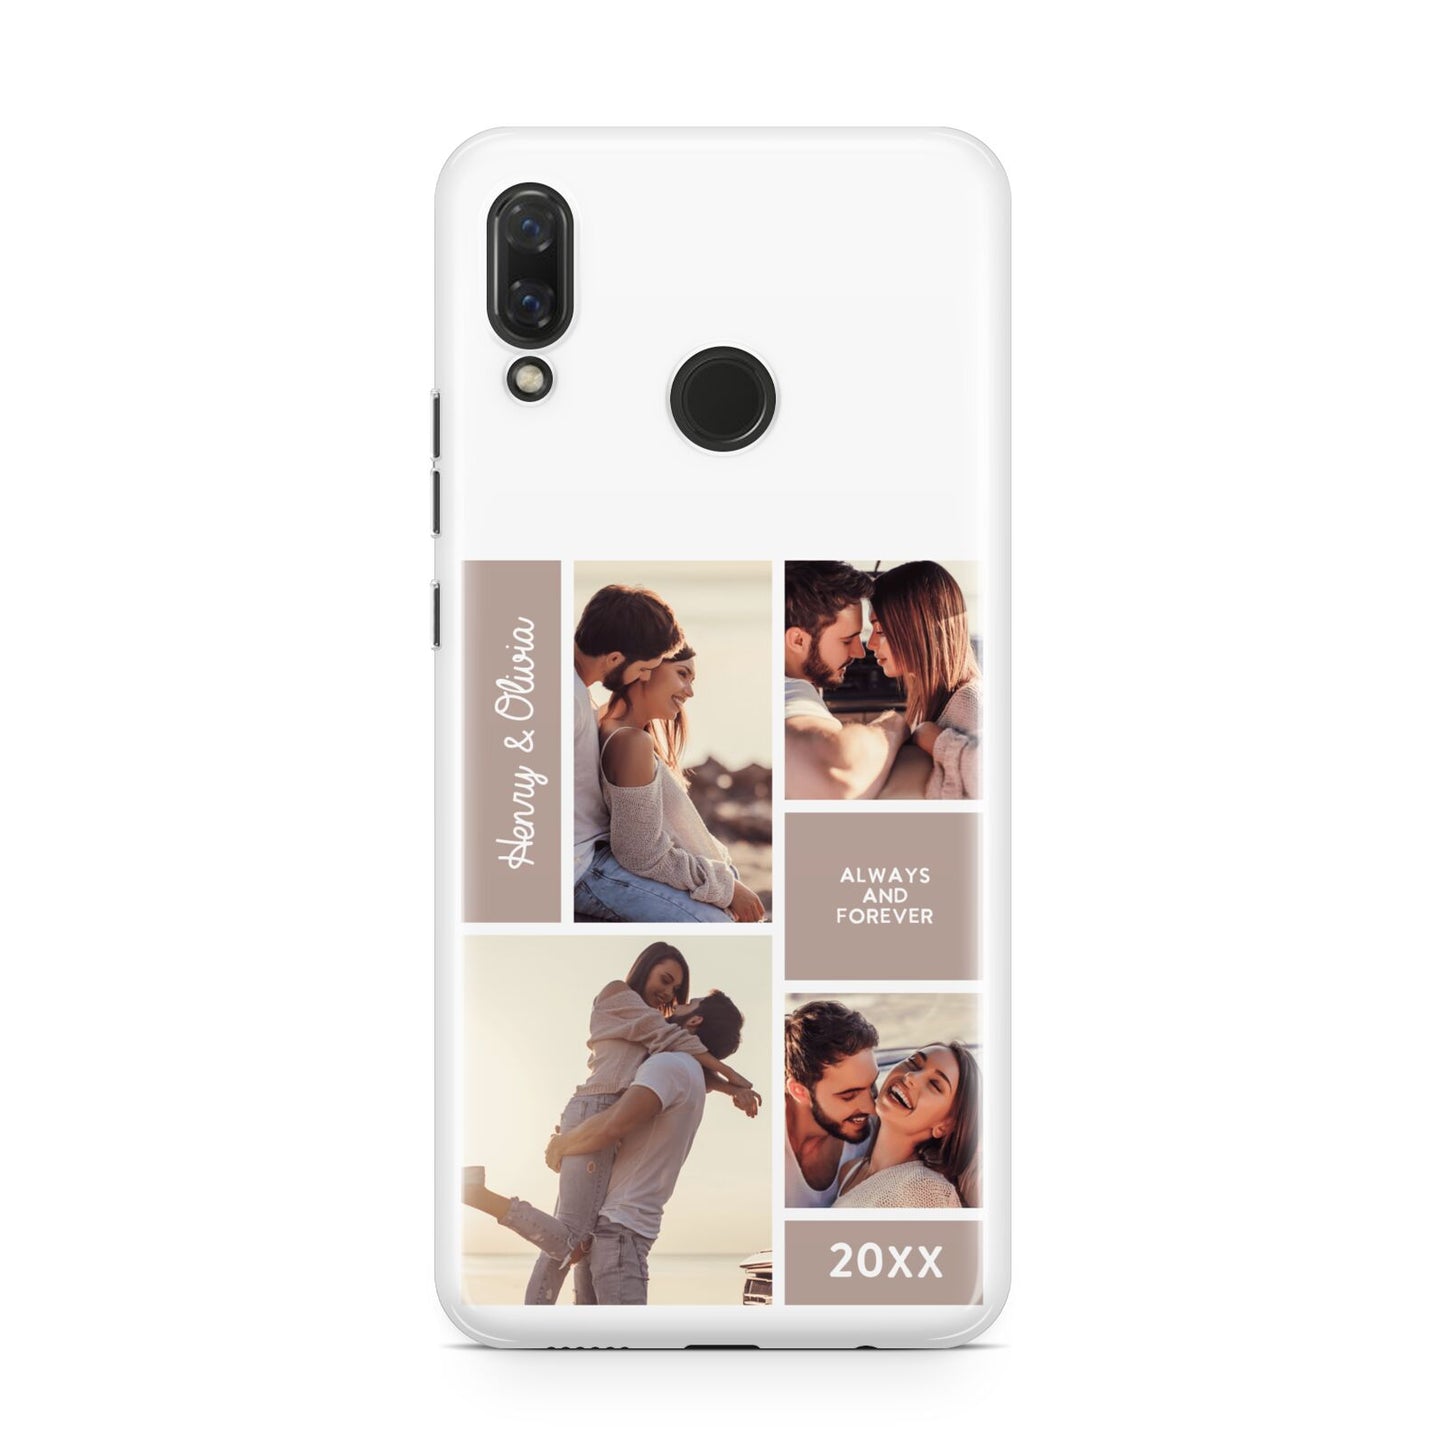 Couples Valentine Photo Collage Personalised Huawei Nova 3 Phone Case